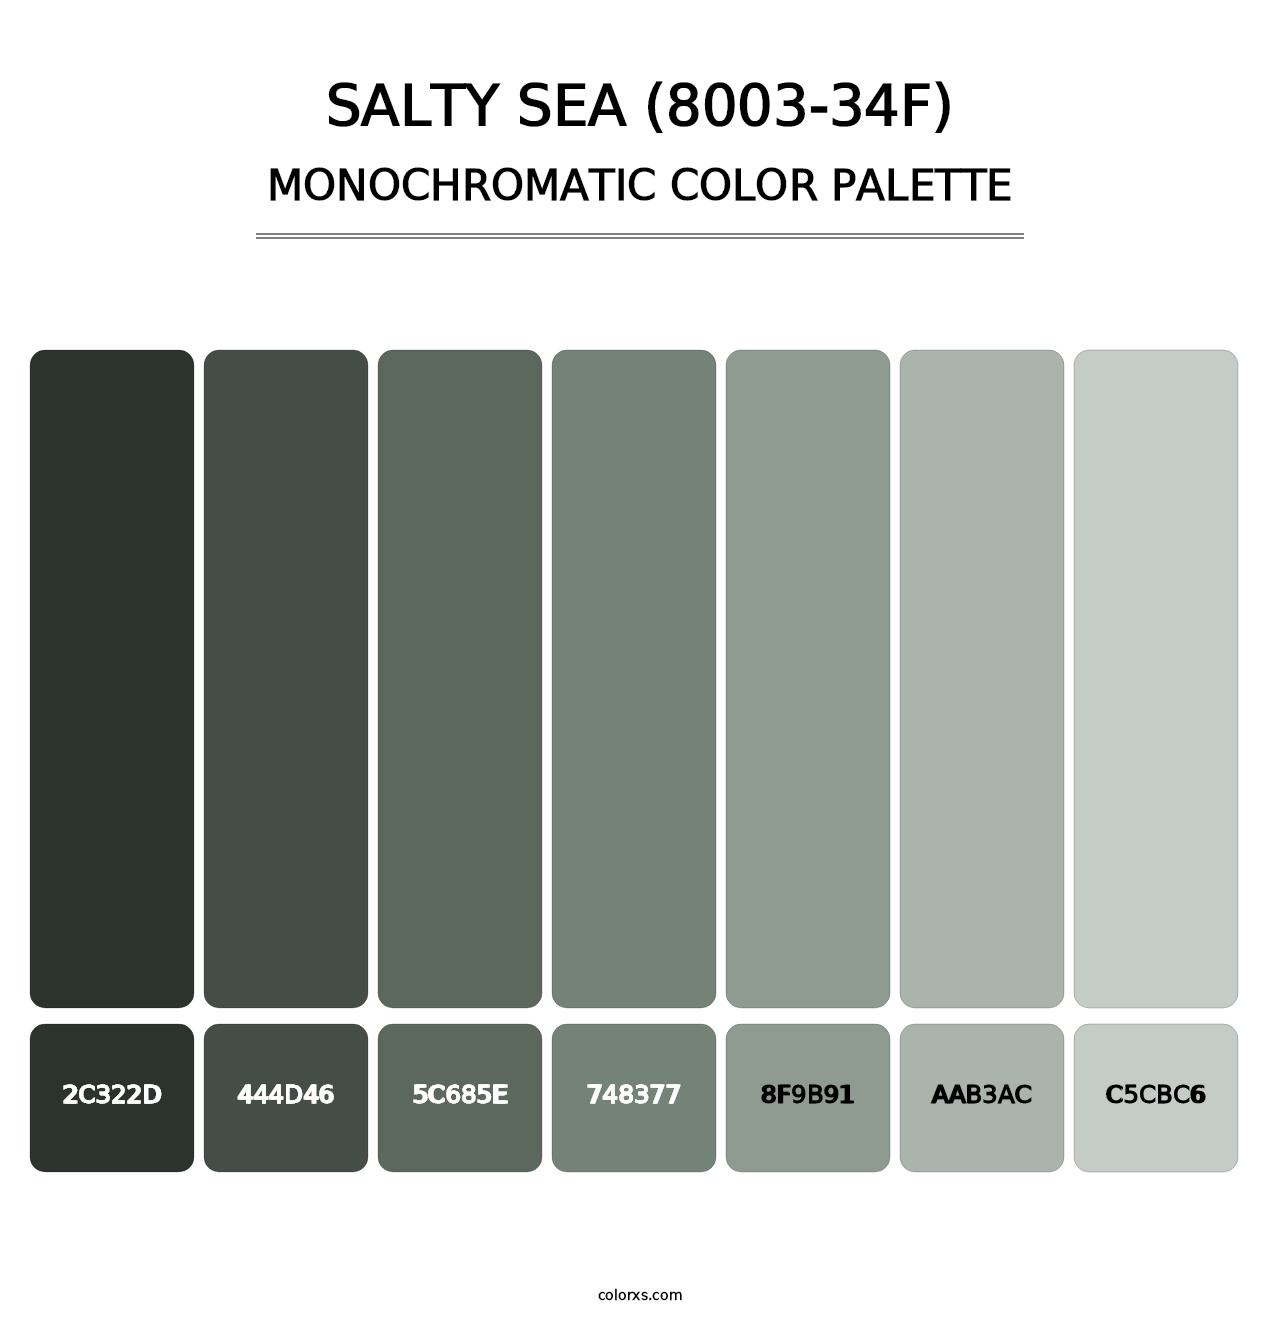 Salty Sea (8003-34F) - Monochromatic Color Palette